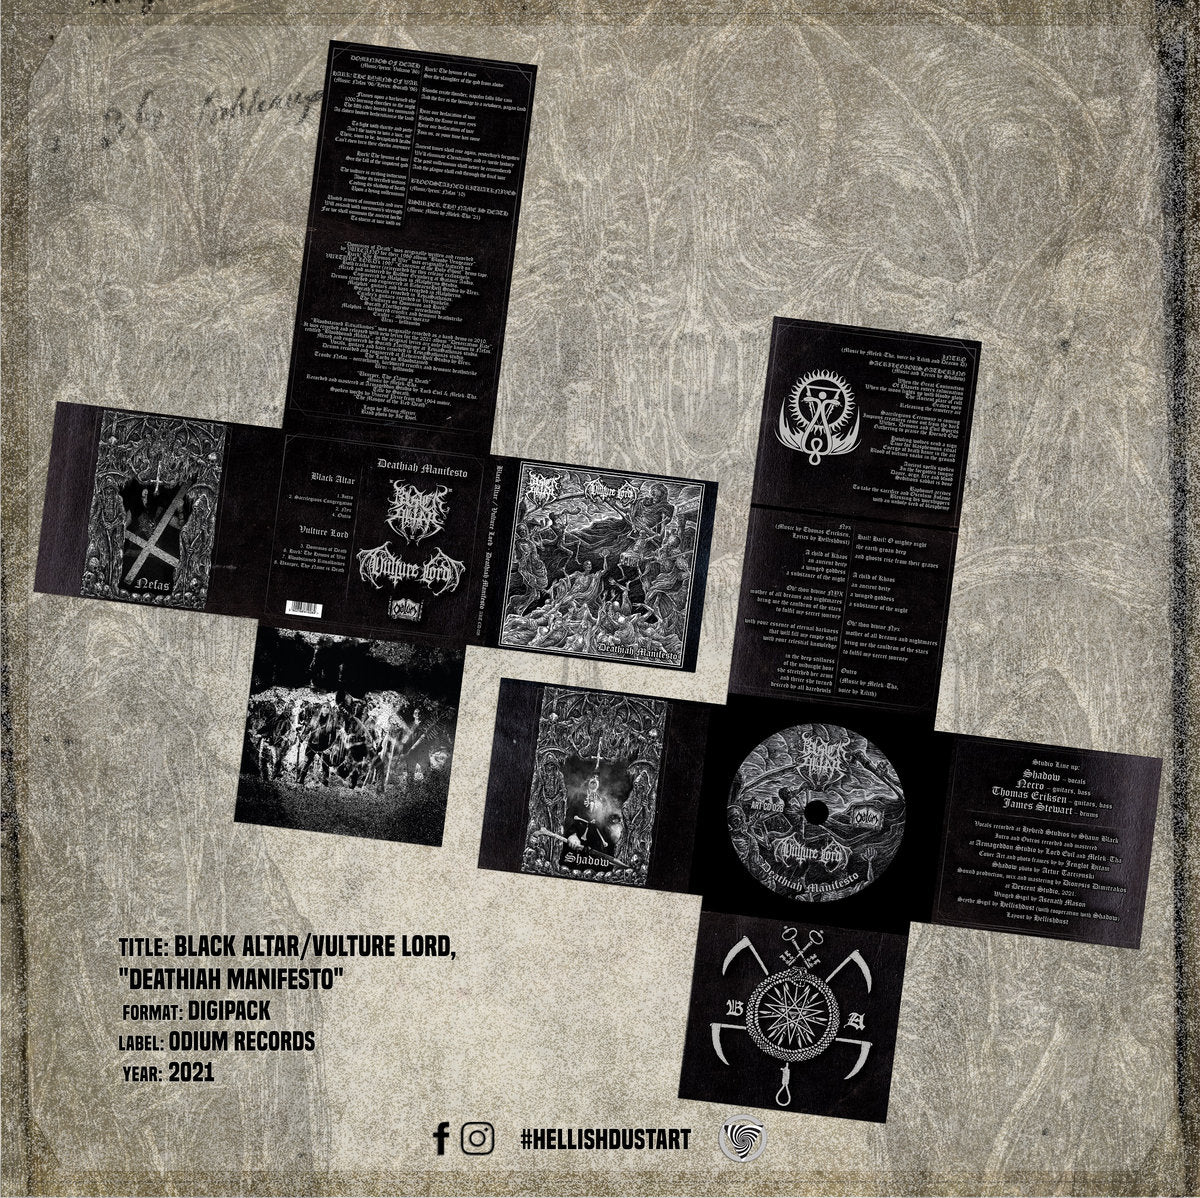 BLACK ALTAR / VULTURE LORD - Deathiah Manifesto SPLIT CD